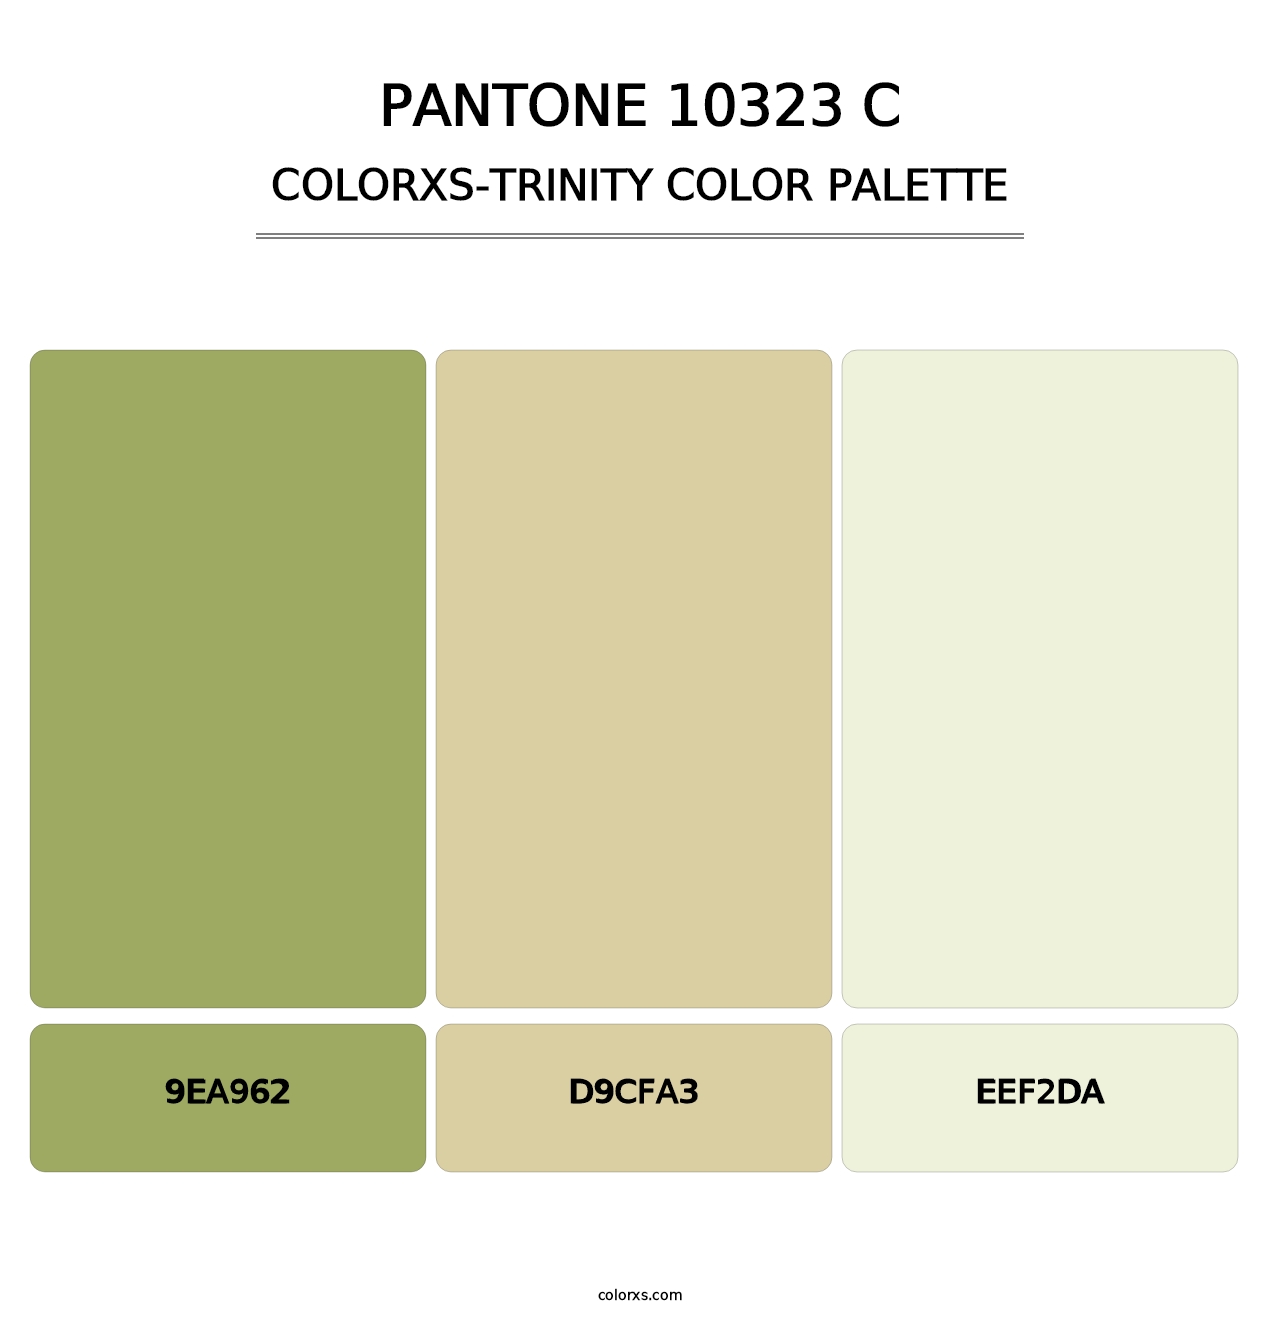 PANTONE 10323 C - Colorxs Trinity Palette